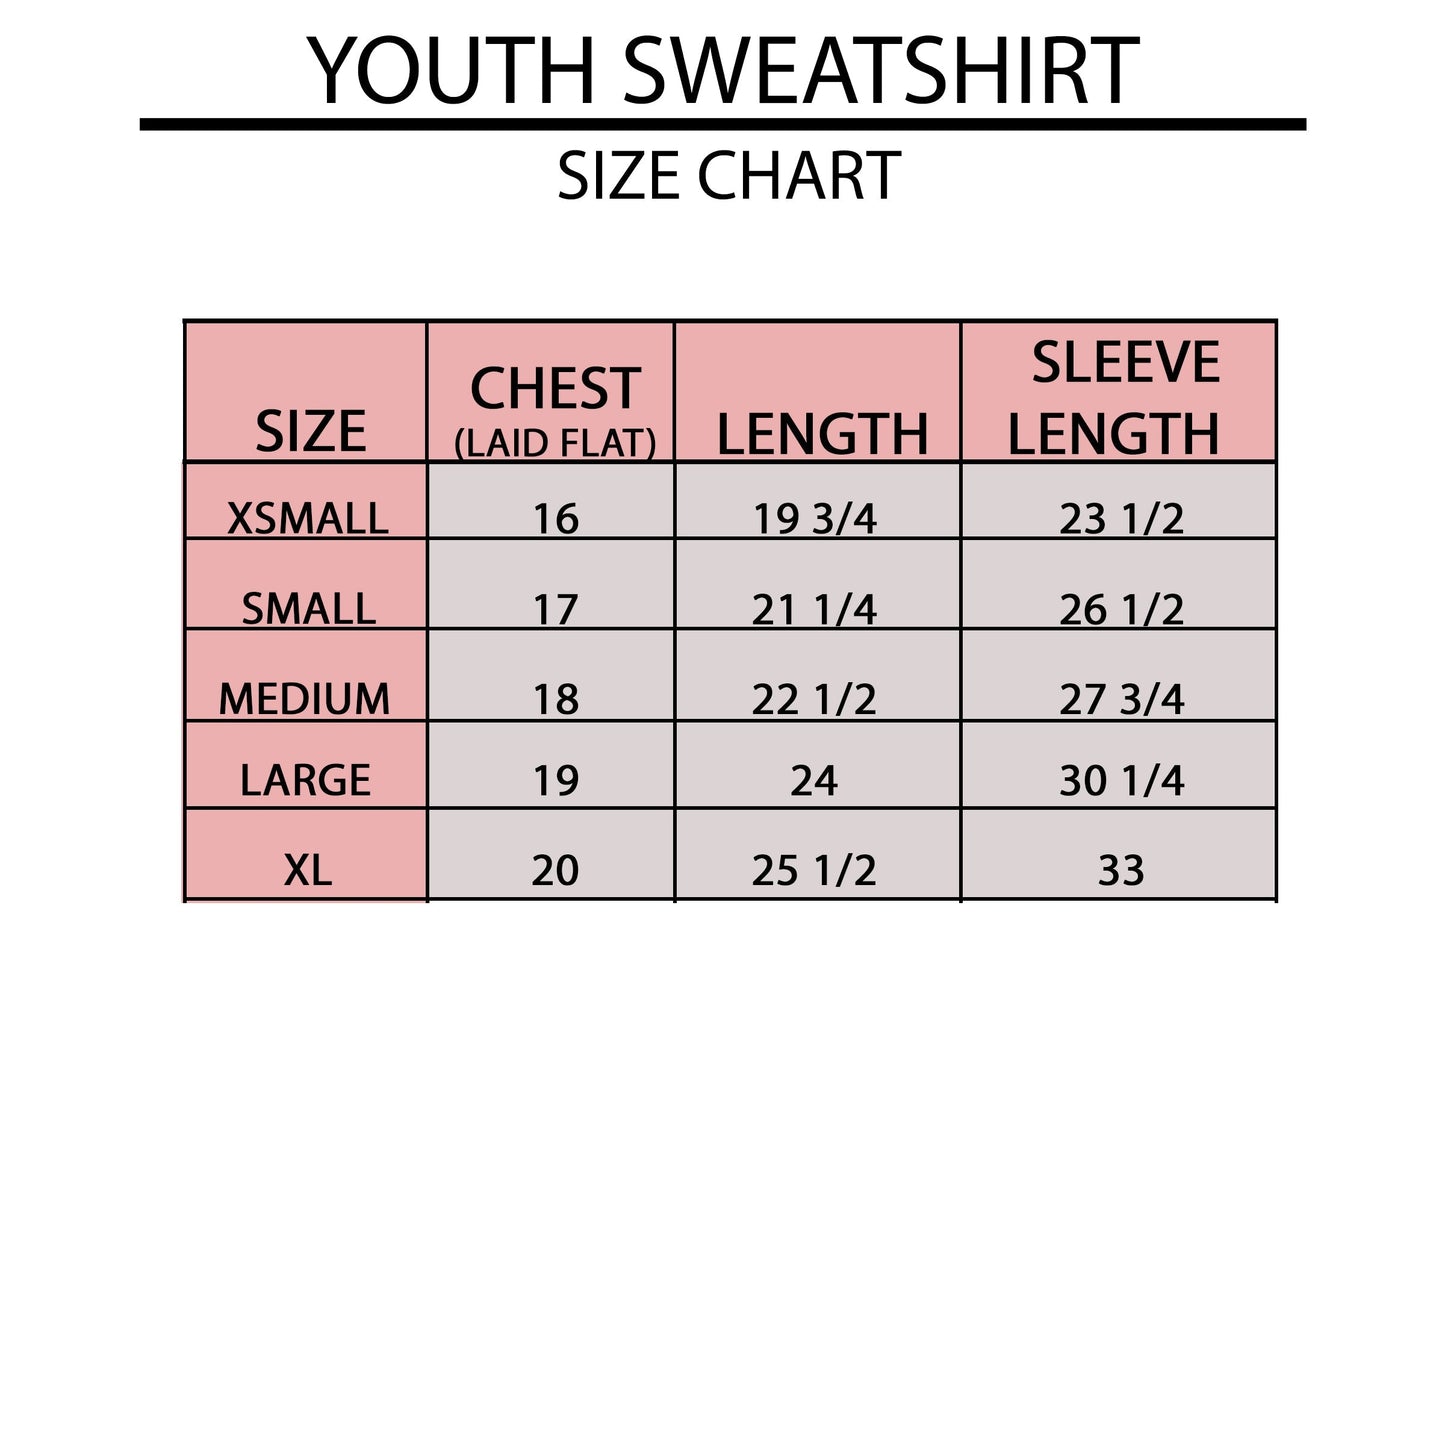 Chaos Creator Triangle | Youth Sweatshirt